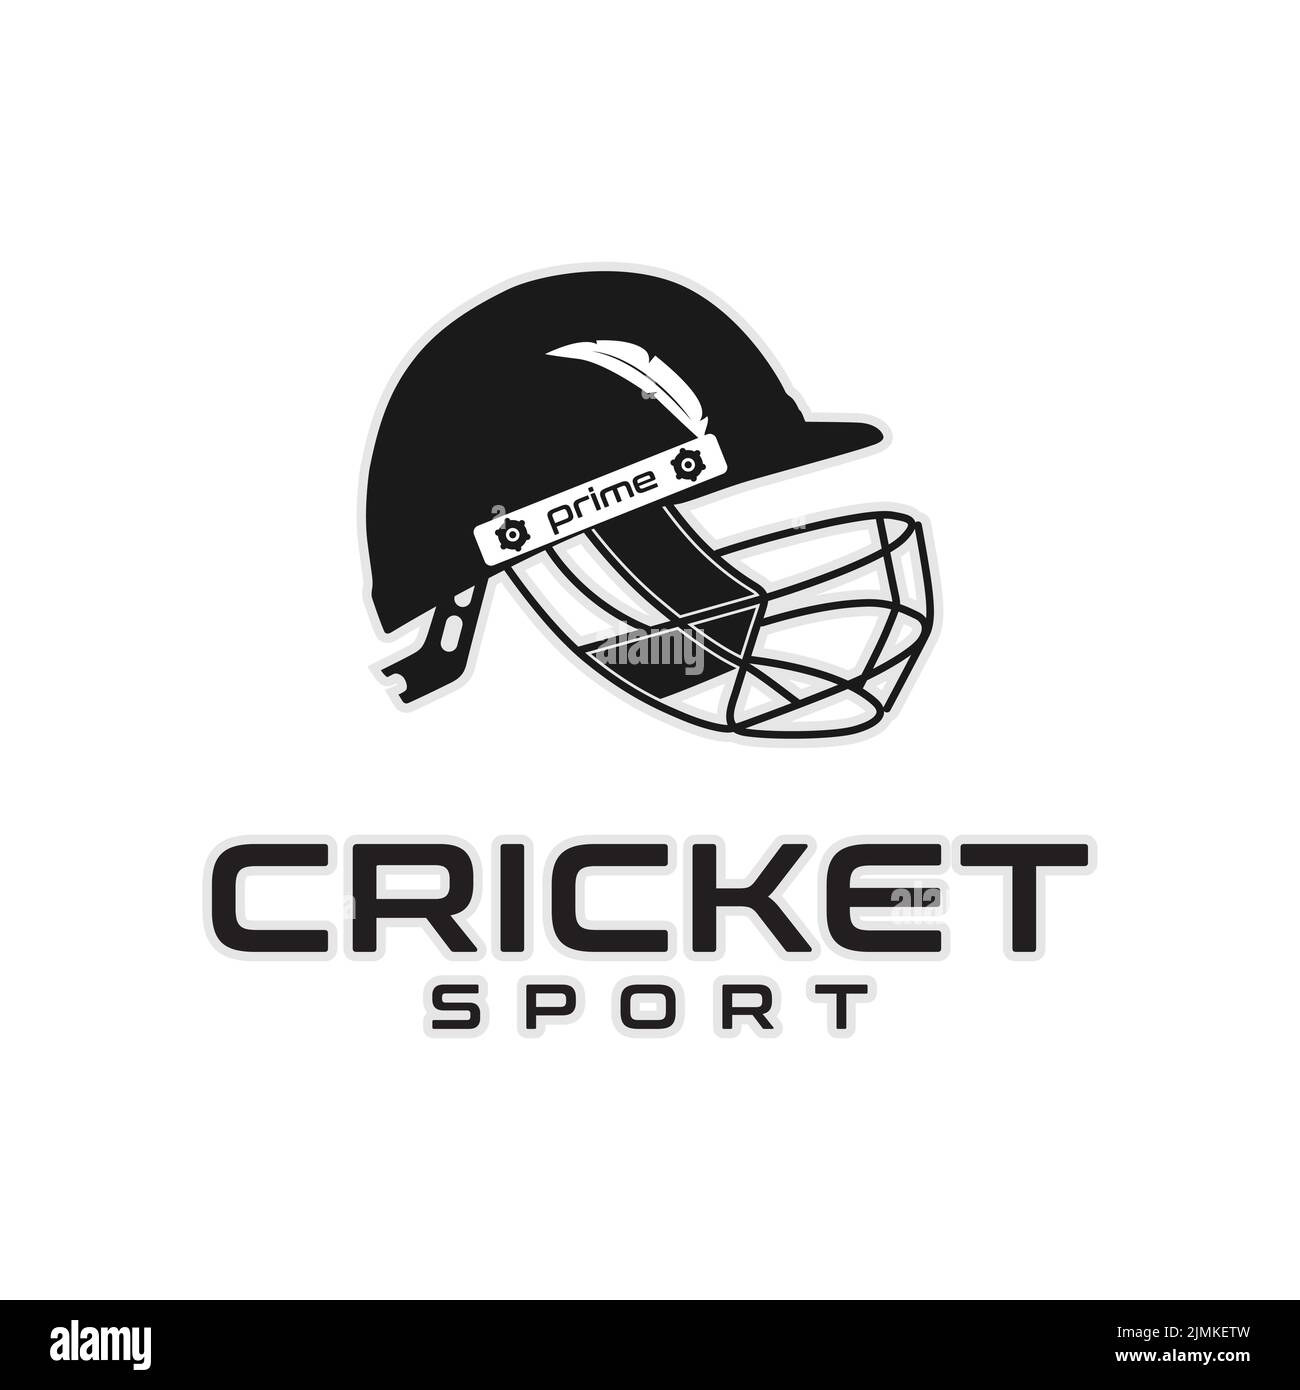 cricket helmet illustration for sports logo design inspiration Stock Vector